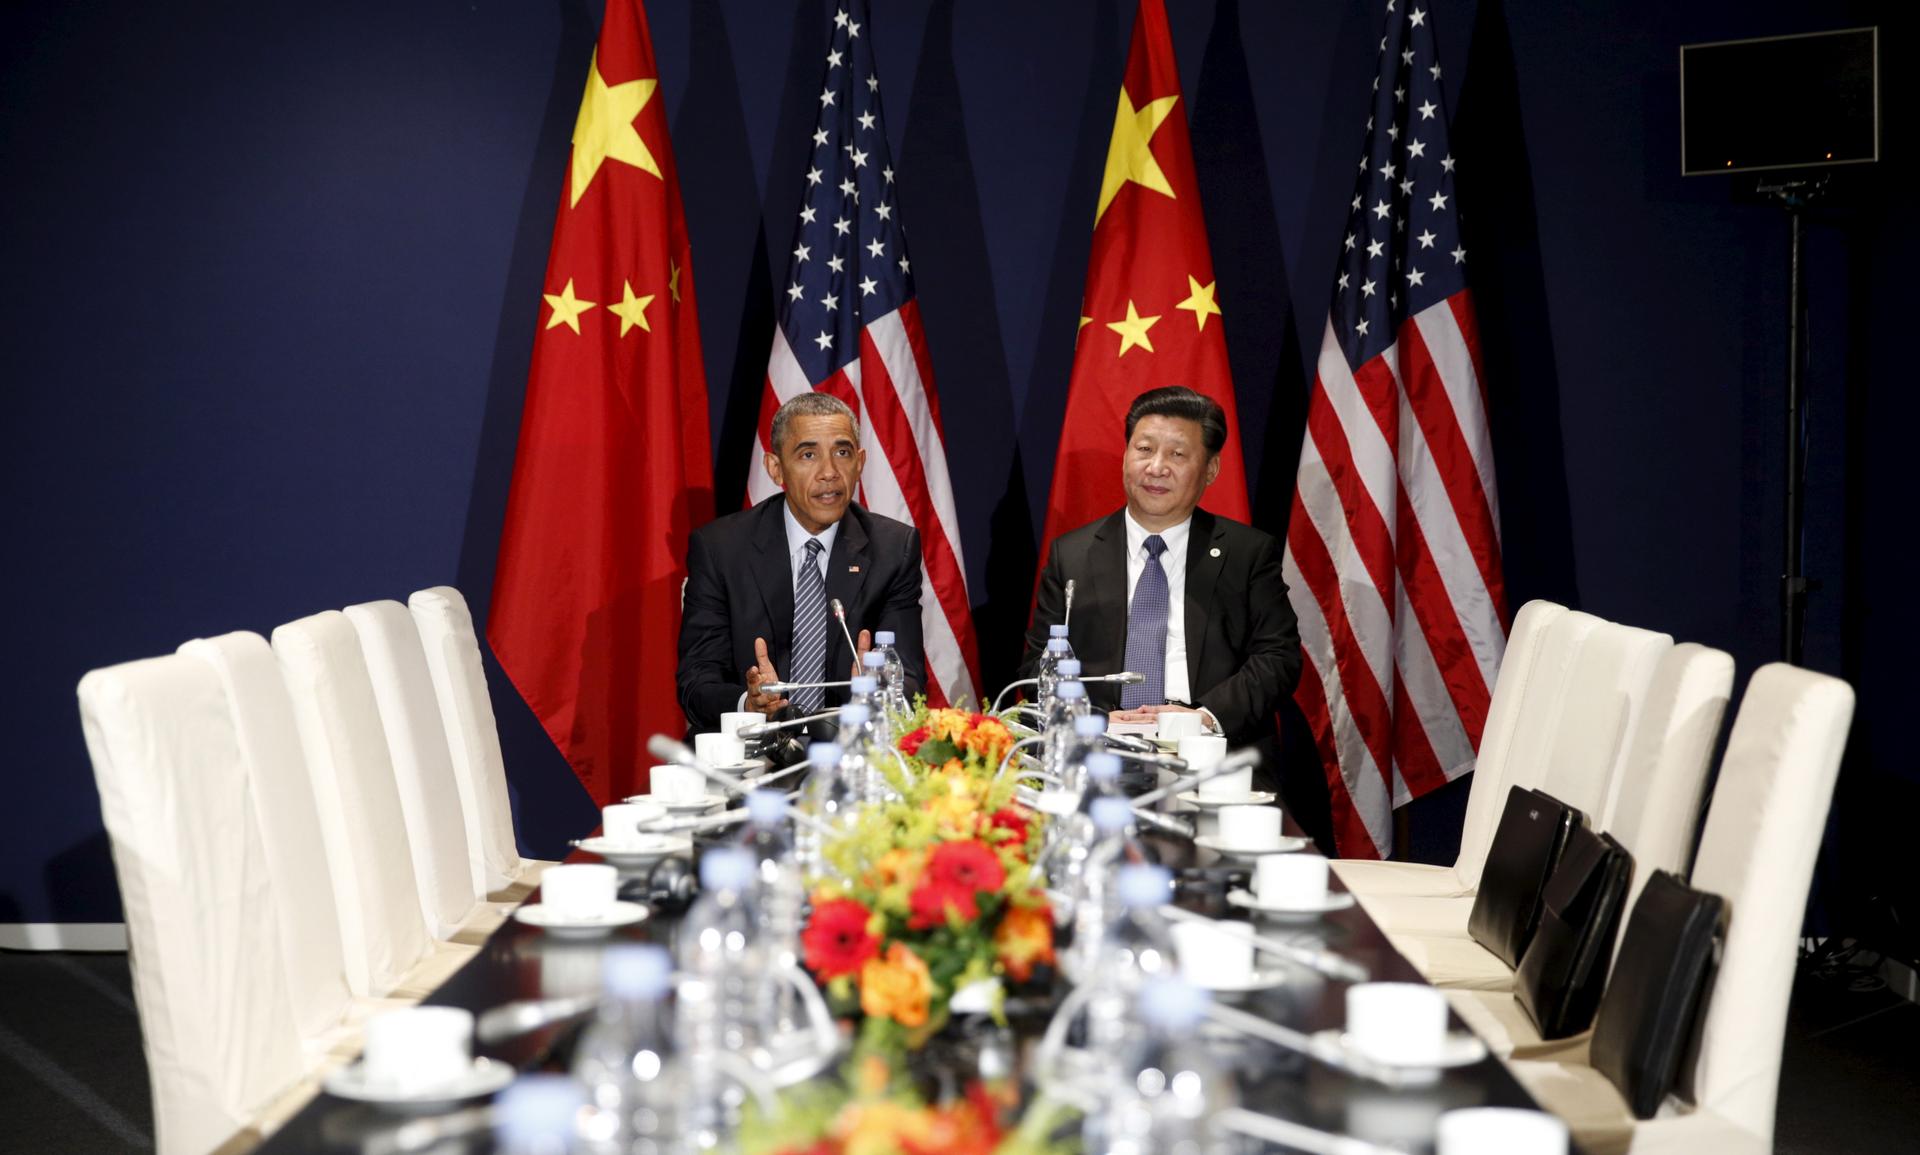 Presidents Barack Obama and Xi Jinping